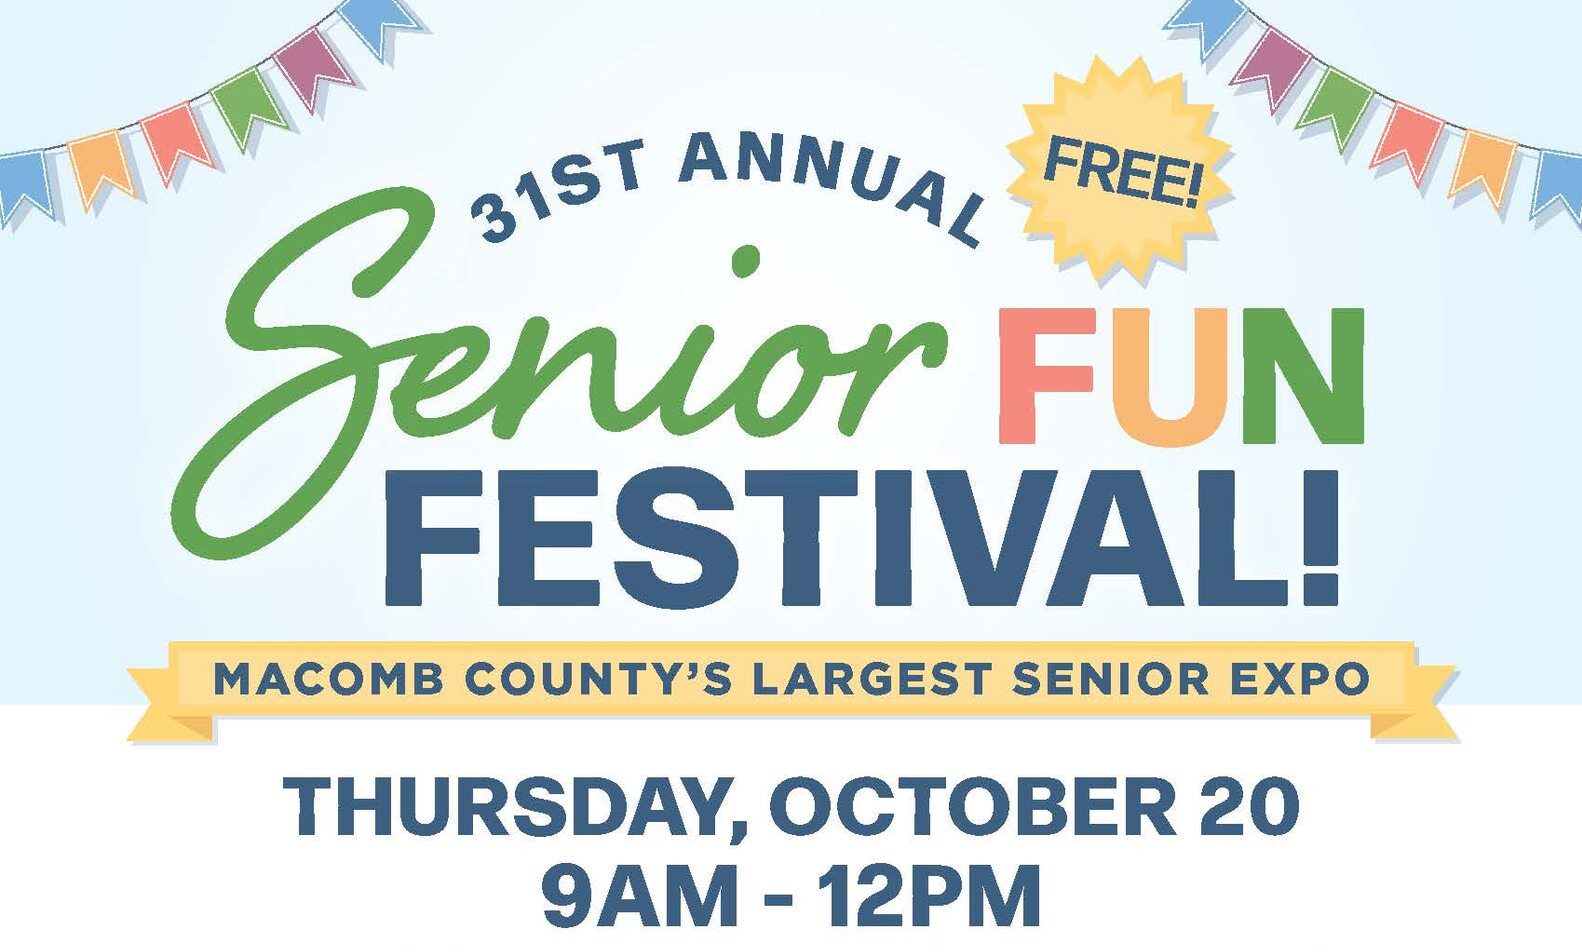 Macomb County Office of Senior Services "Senior Fun Festival" flyer